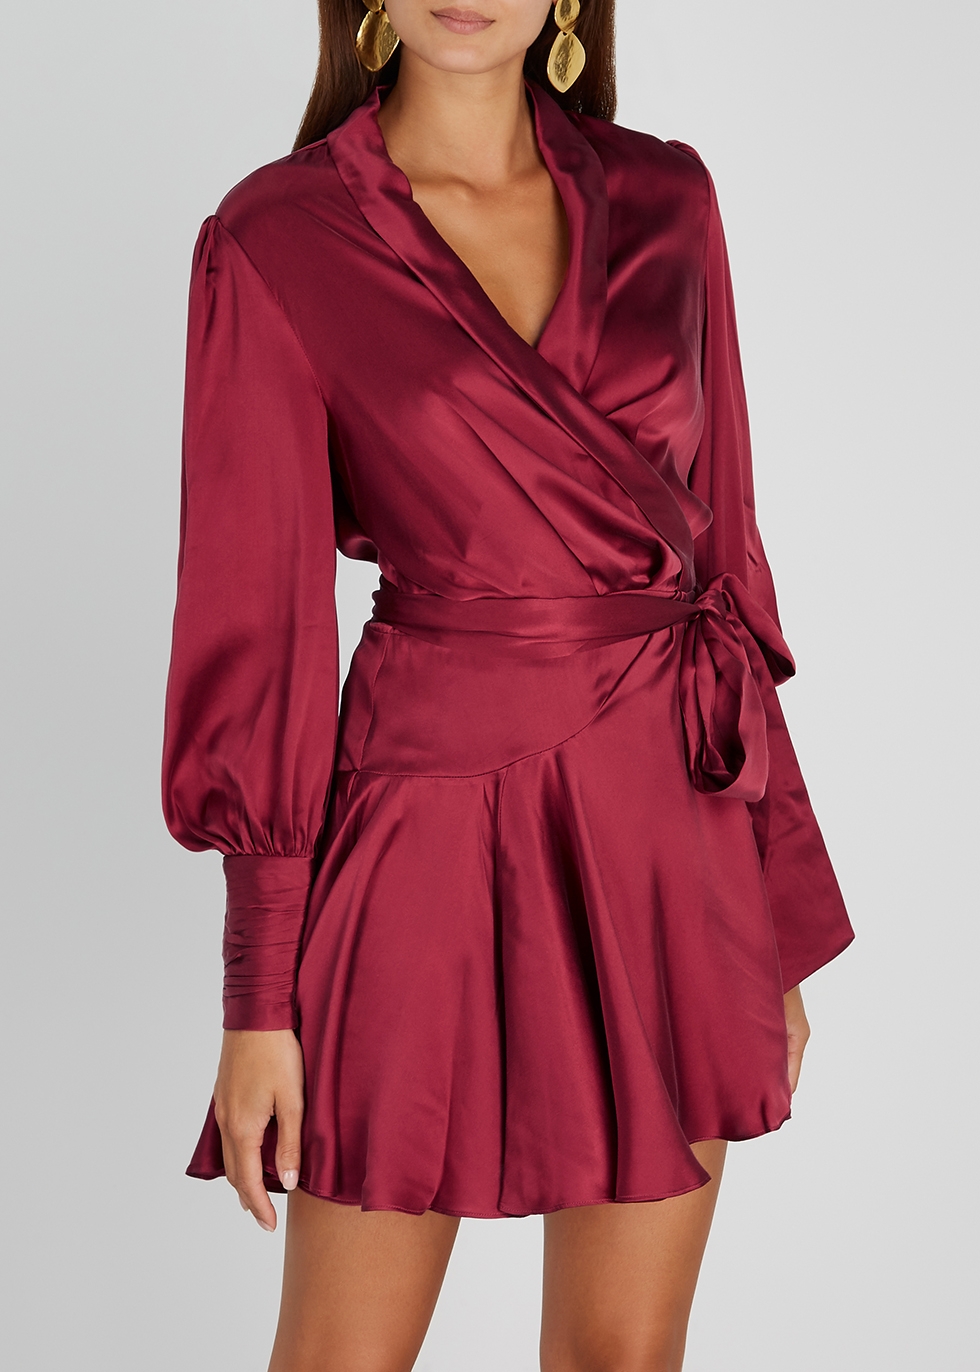 burgundy satin wrap dress